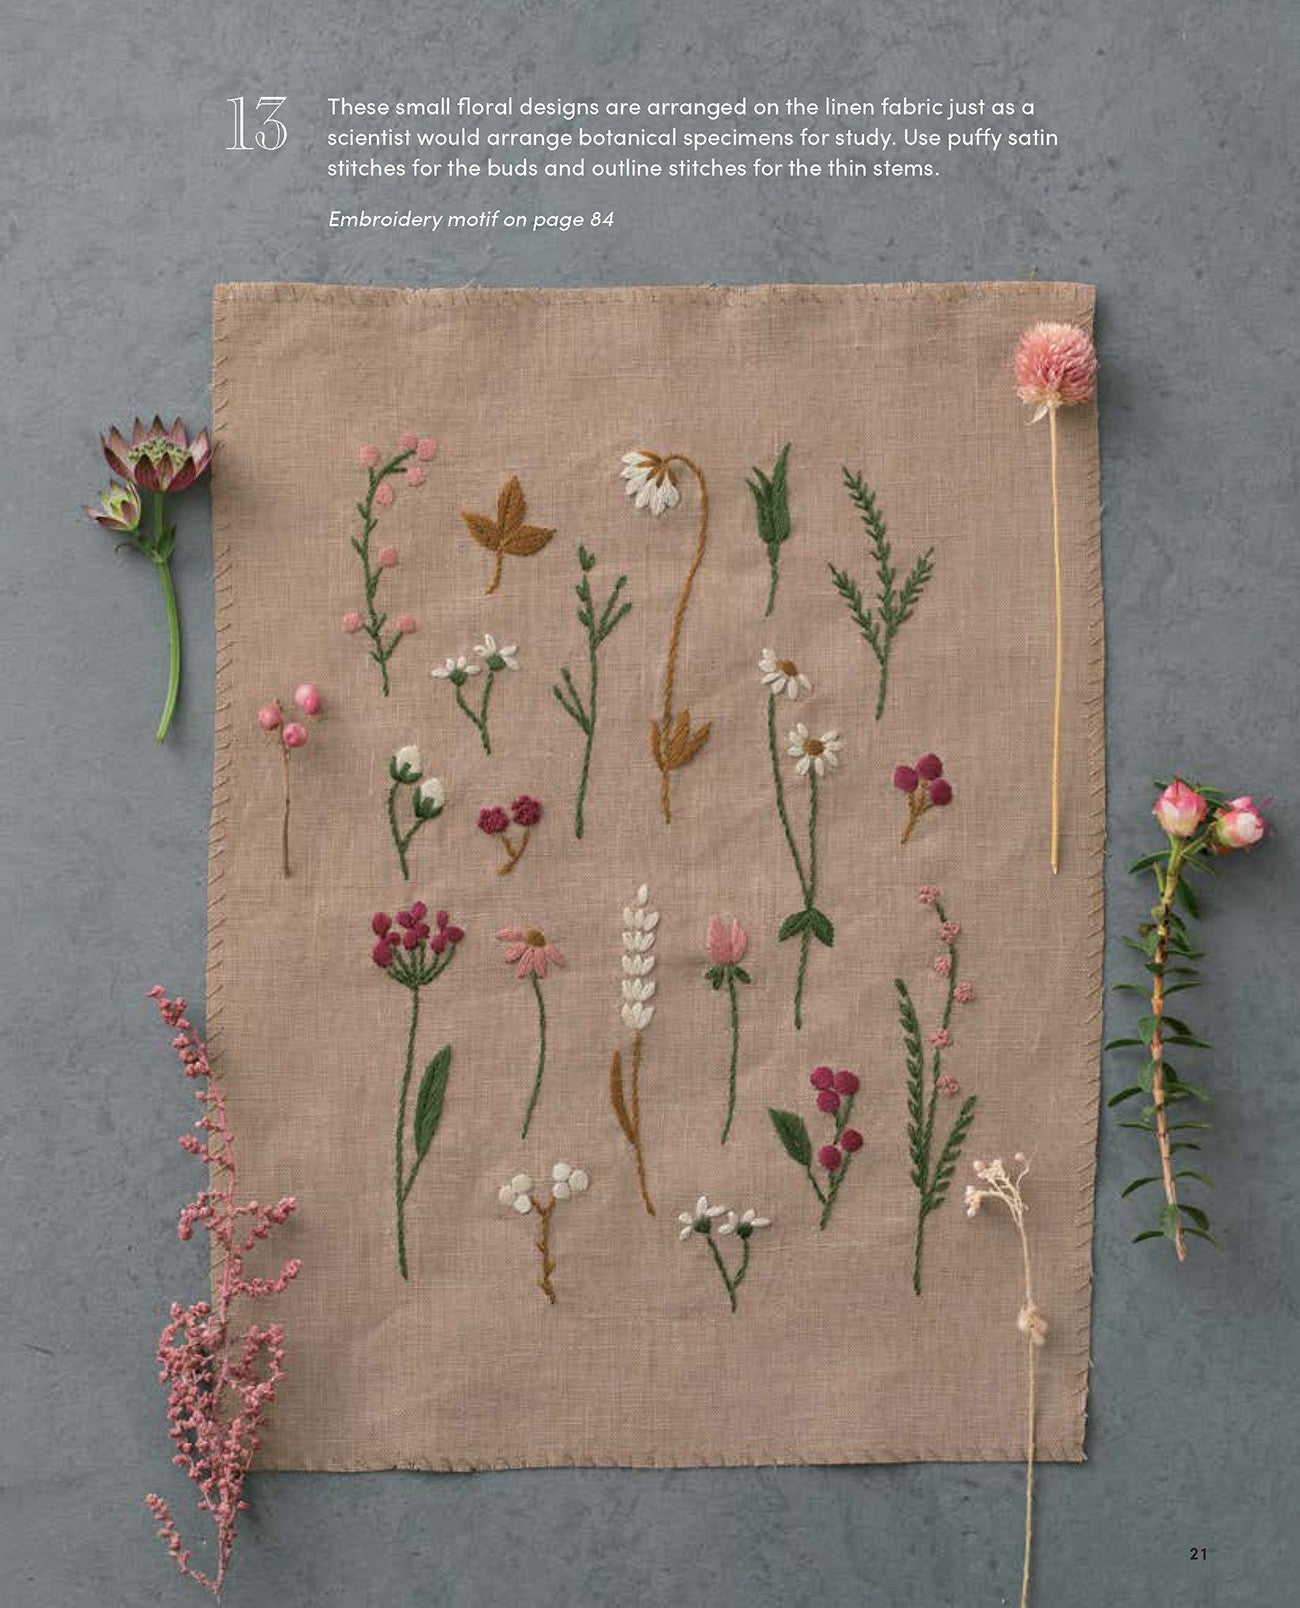 Beautiful Botanical Embroidery by Alice Makabe